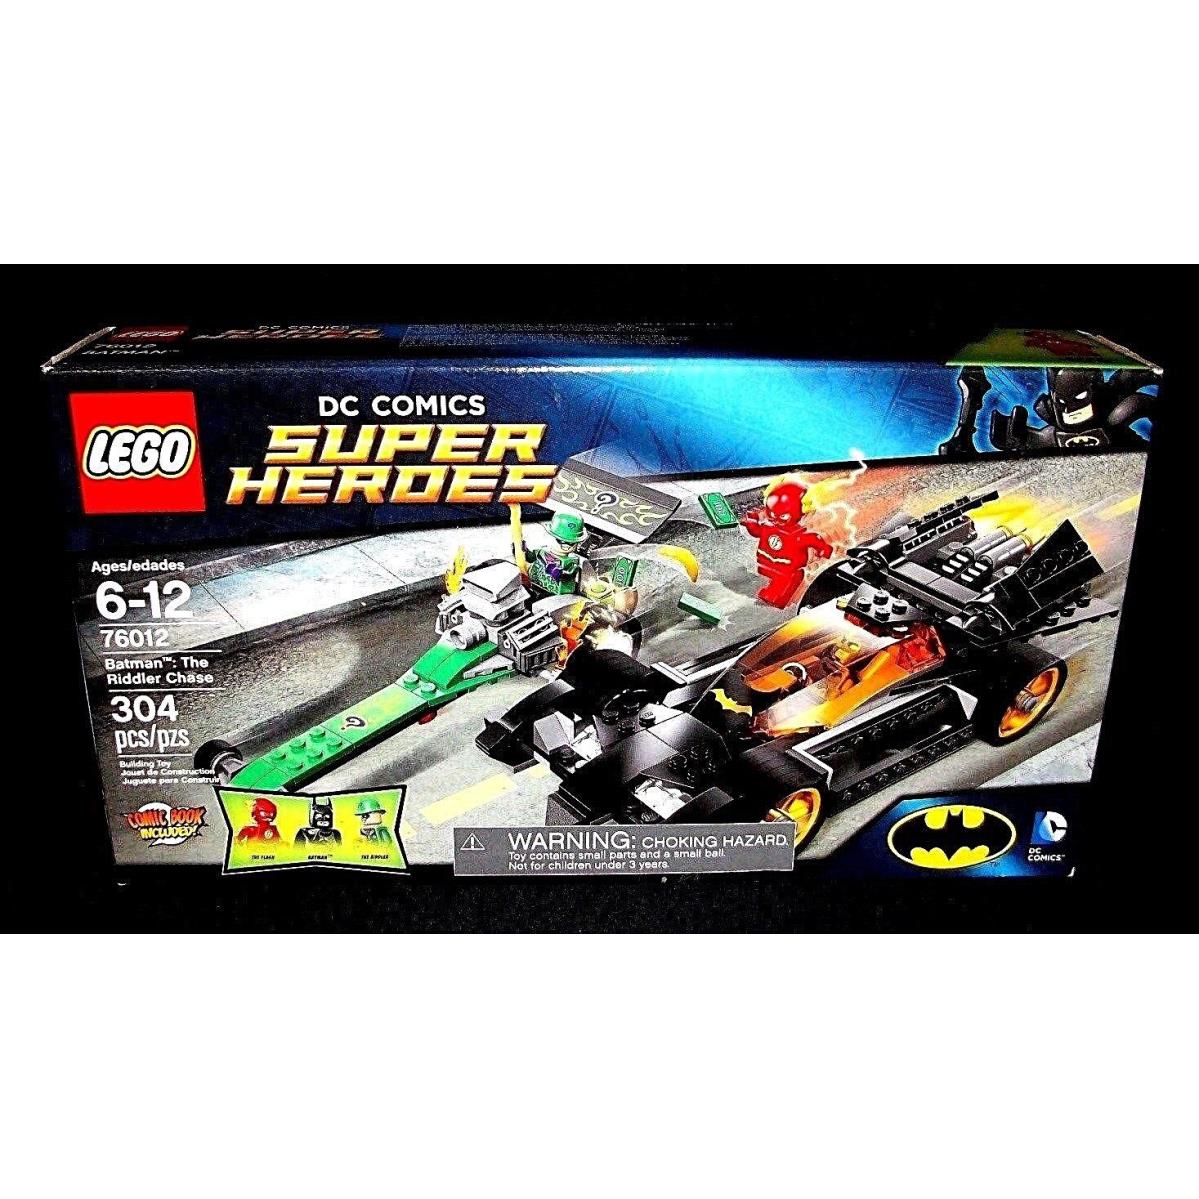 Lego DC Comics Super Heroes Batman The Riddler Chase Flash Minifig Toy Set 76012